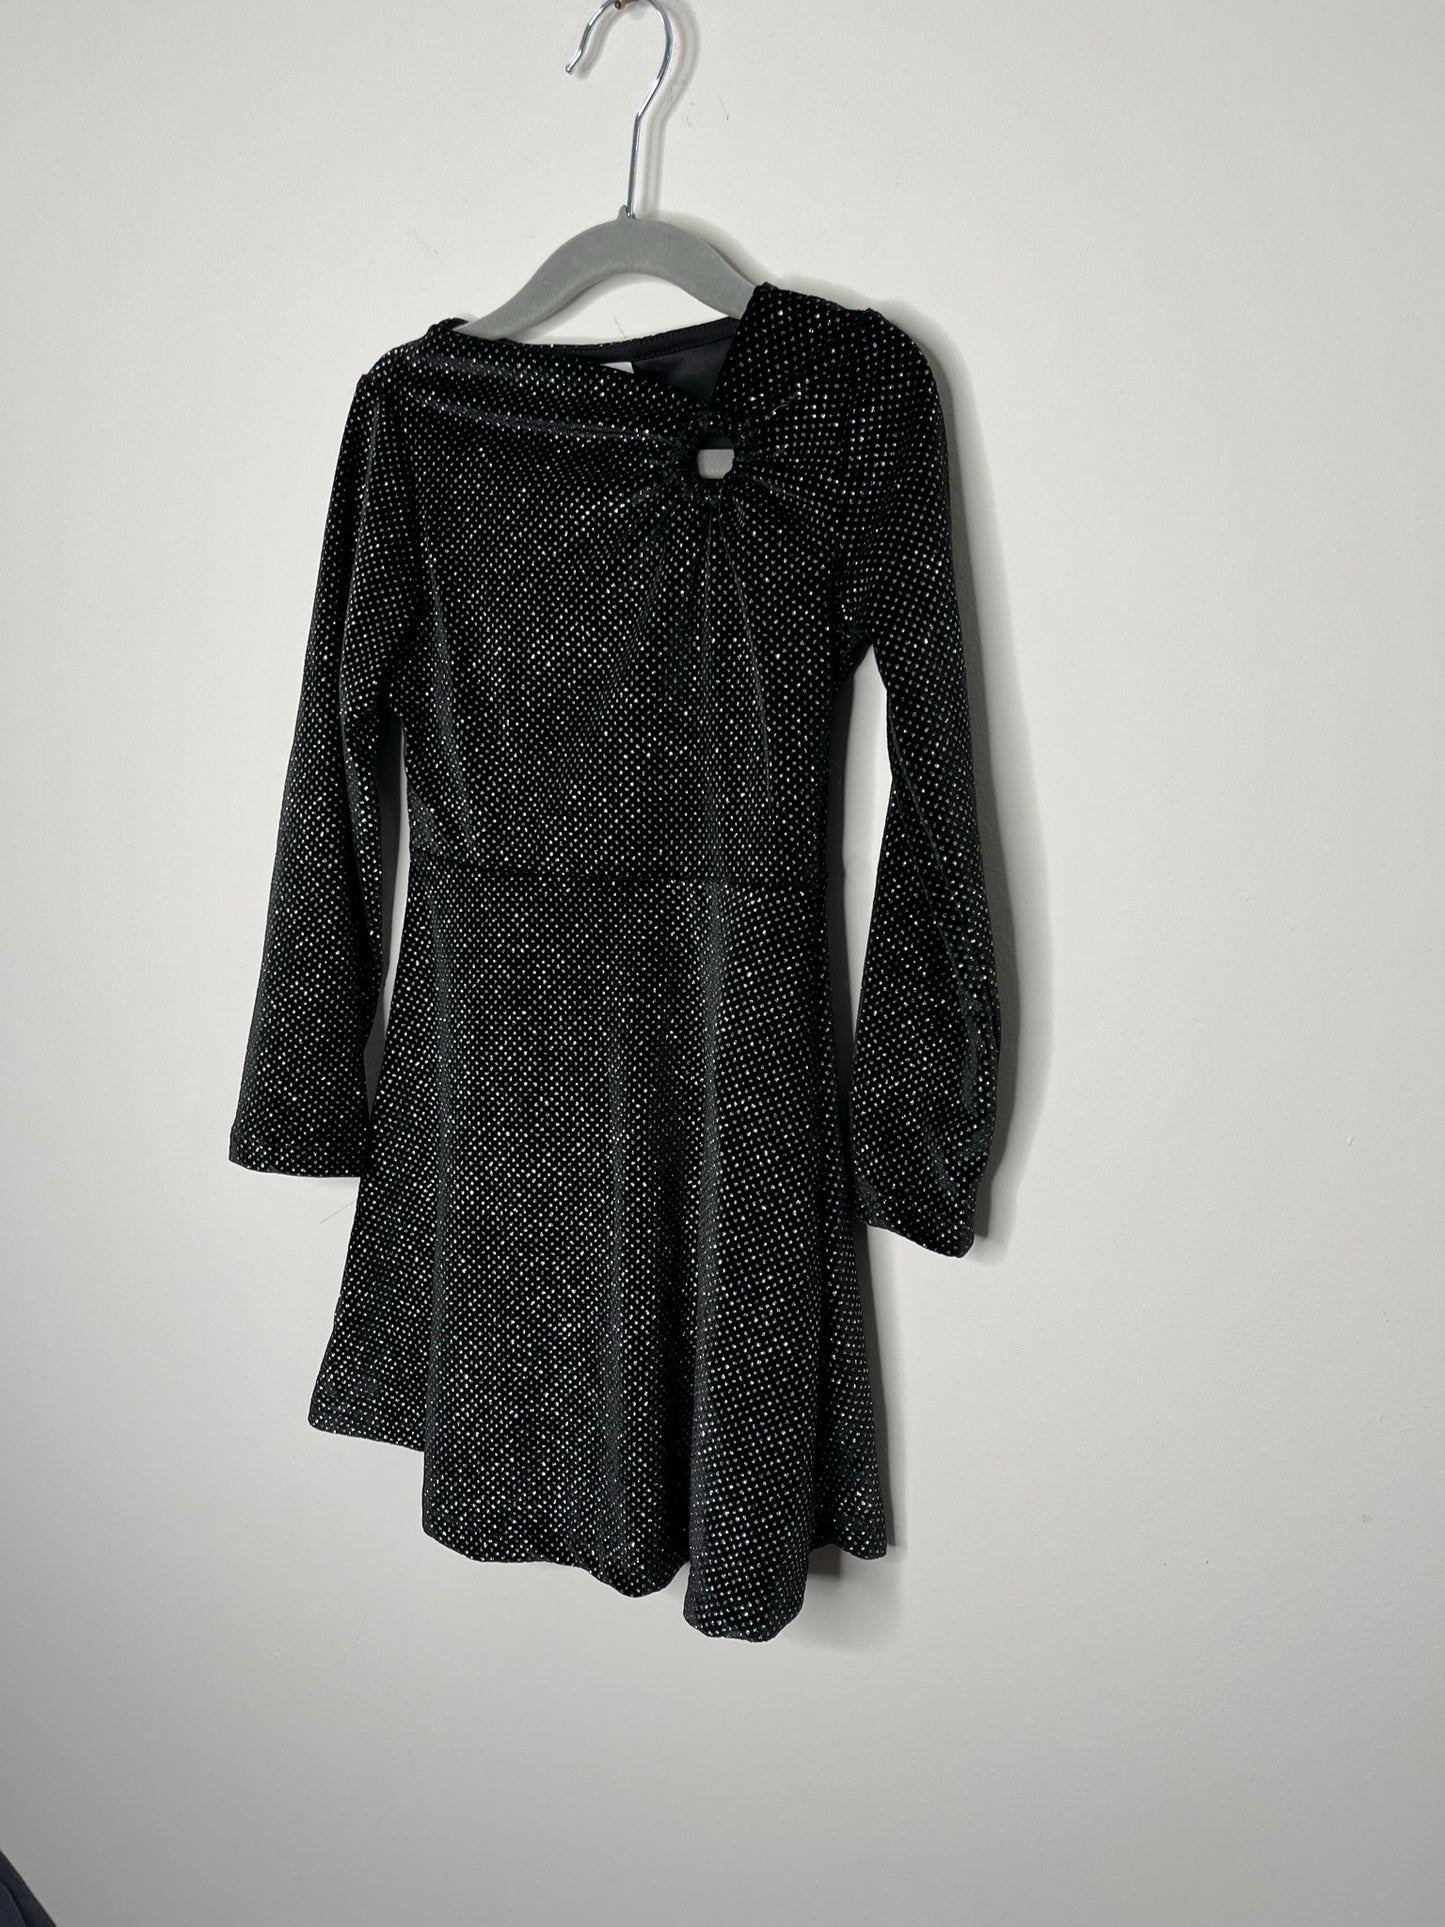 Zara Keyhole Sparkle Party Dress (6)